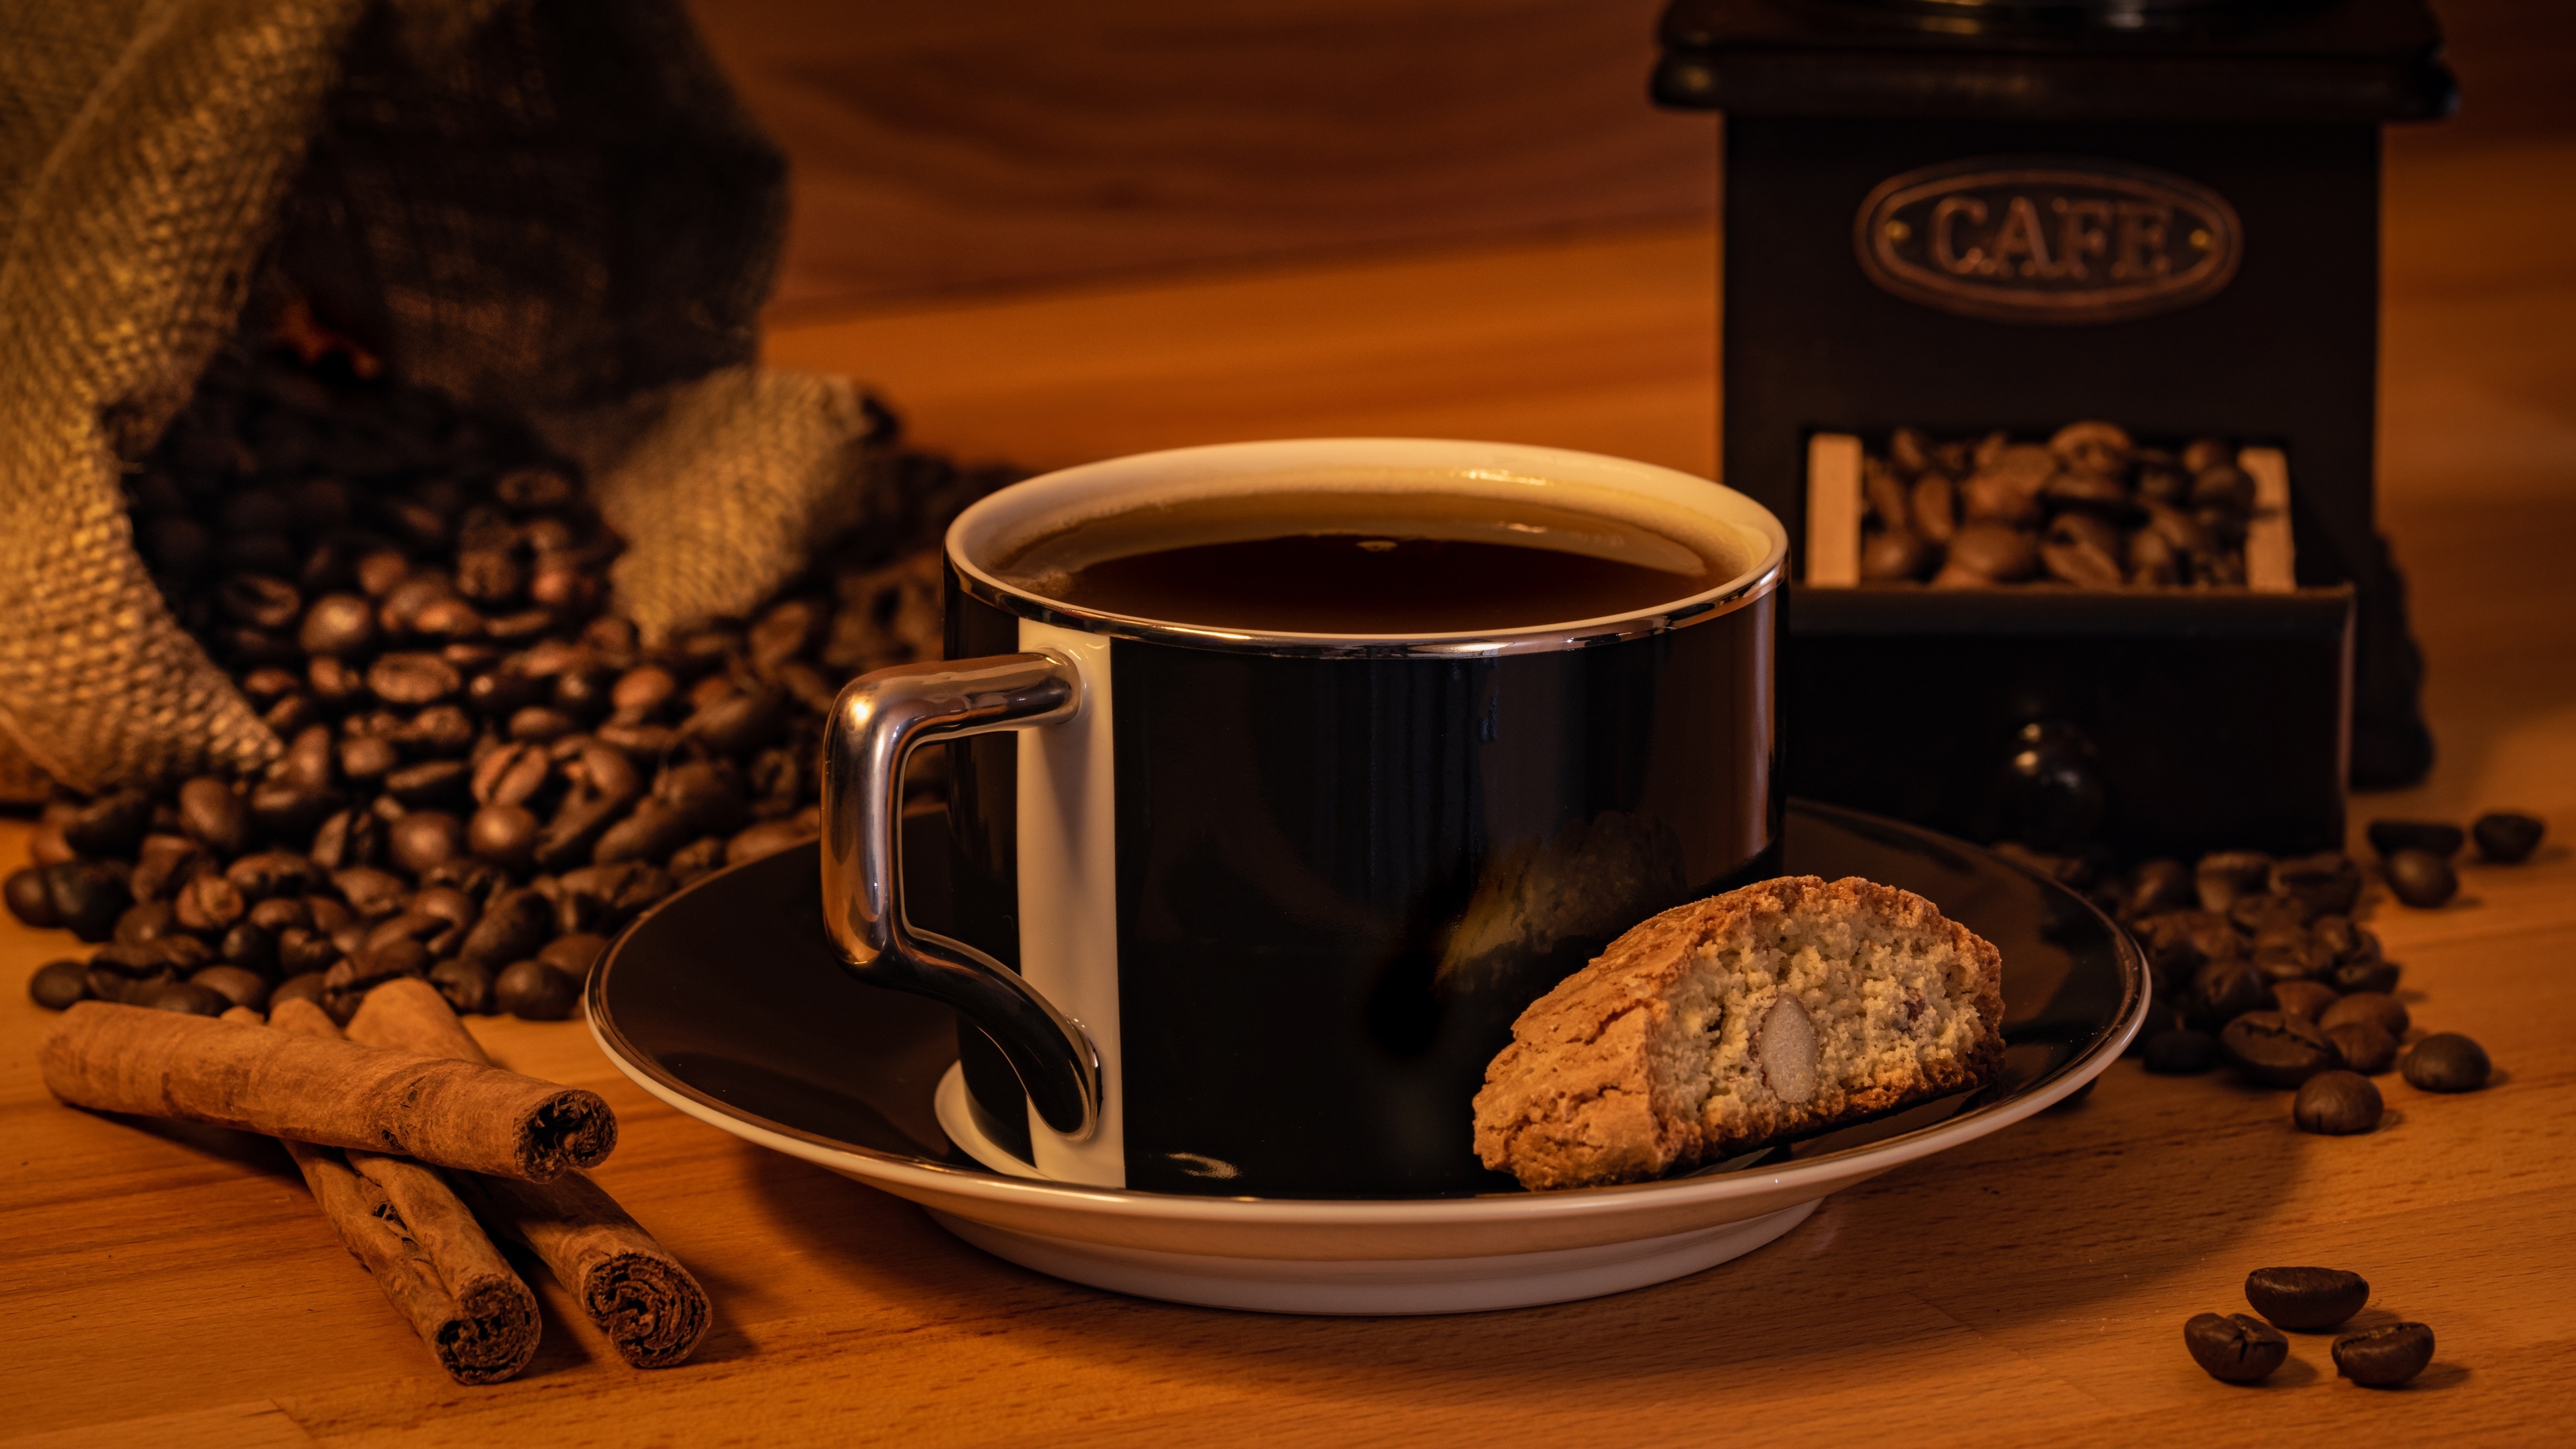 Coffee 4K wallpaper, Ultra HD image, Rich aroma, Roasted beans, 3840x2160 4K Desktop